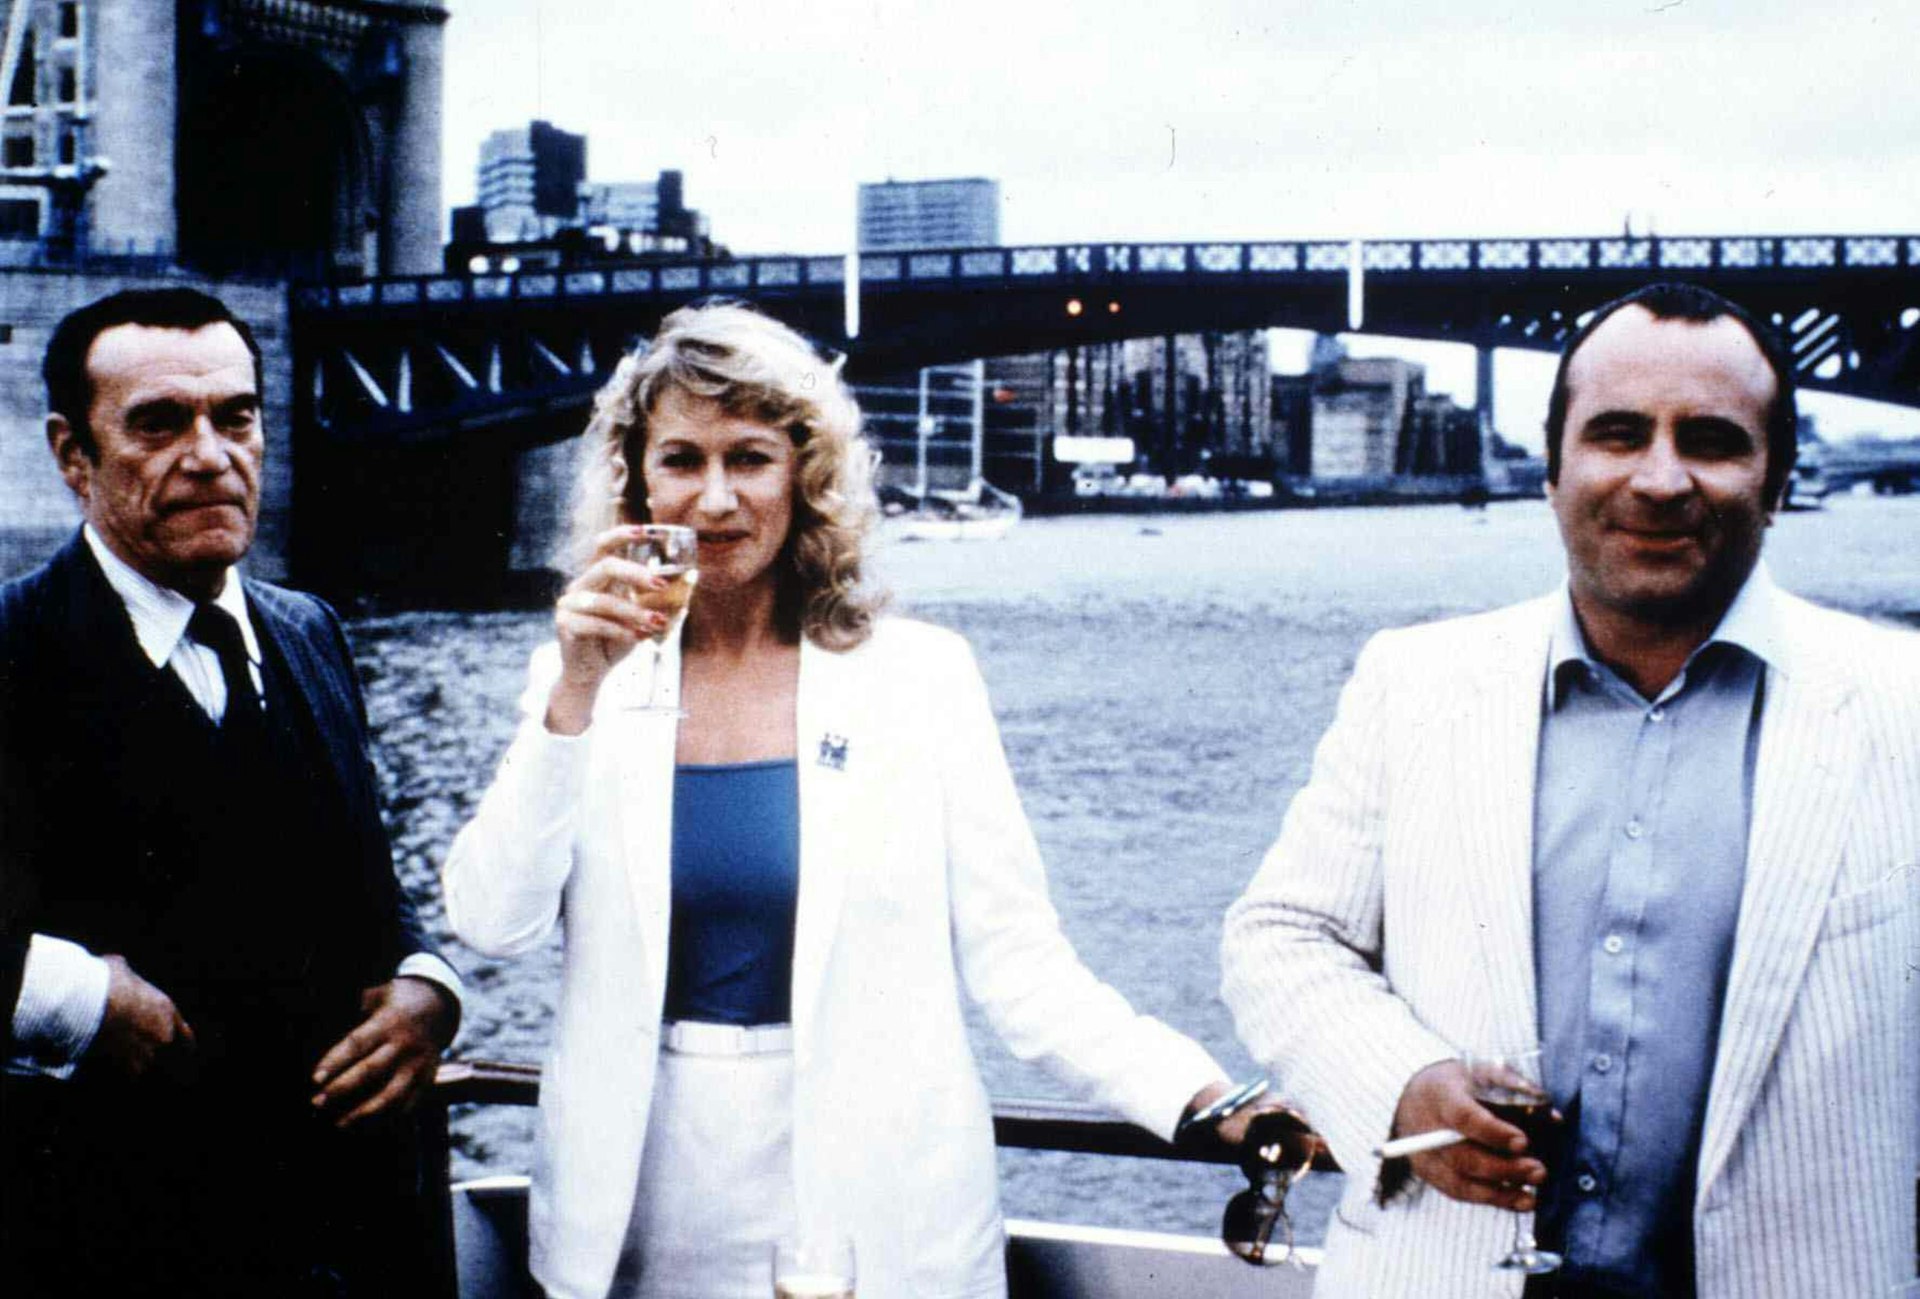 Eddie Constantine, Helen Mirren and Bob Hoskins stand on a bridge in London. Mirren is holding a glass of wine up.